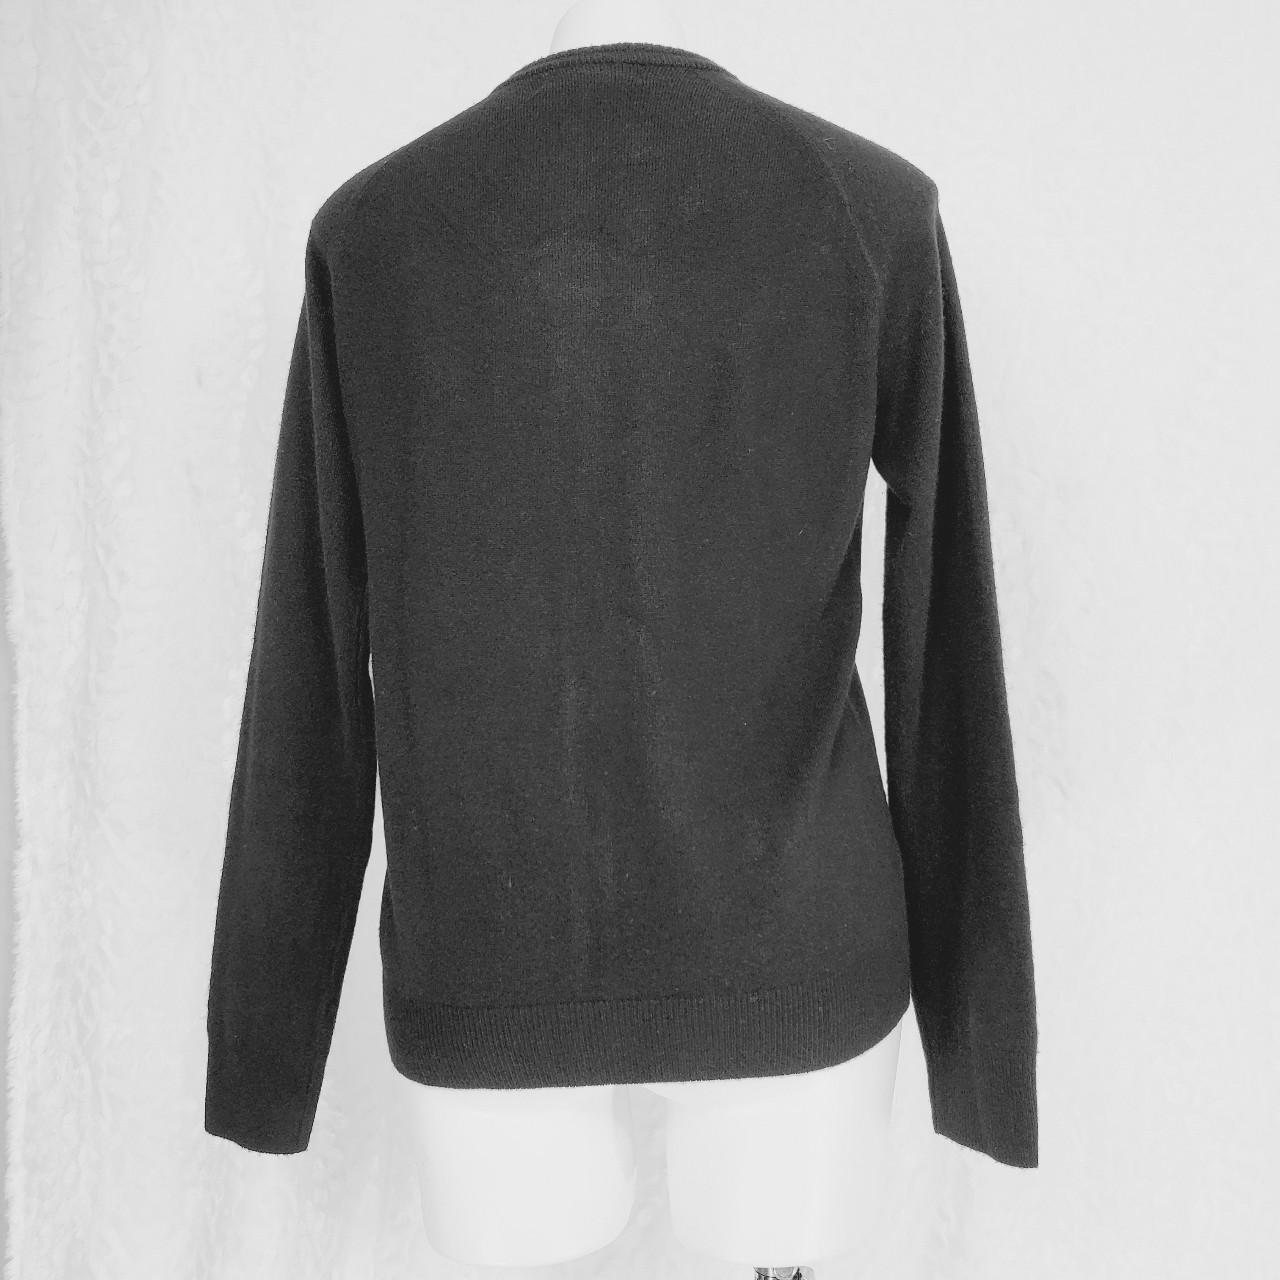 Product Image 3 - Karen Scott soft black sweater